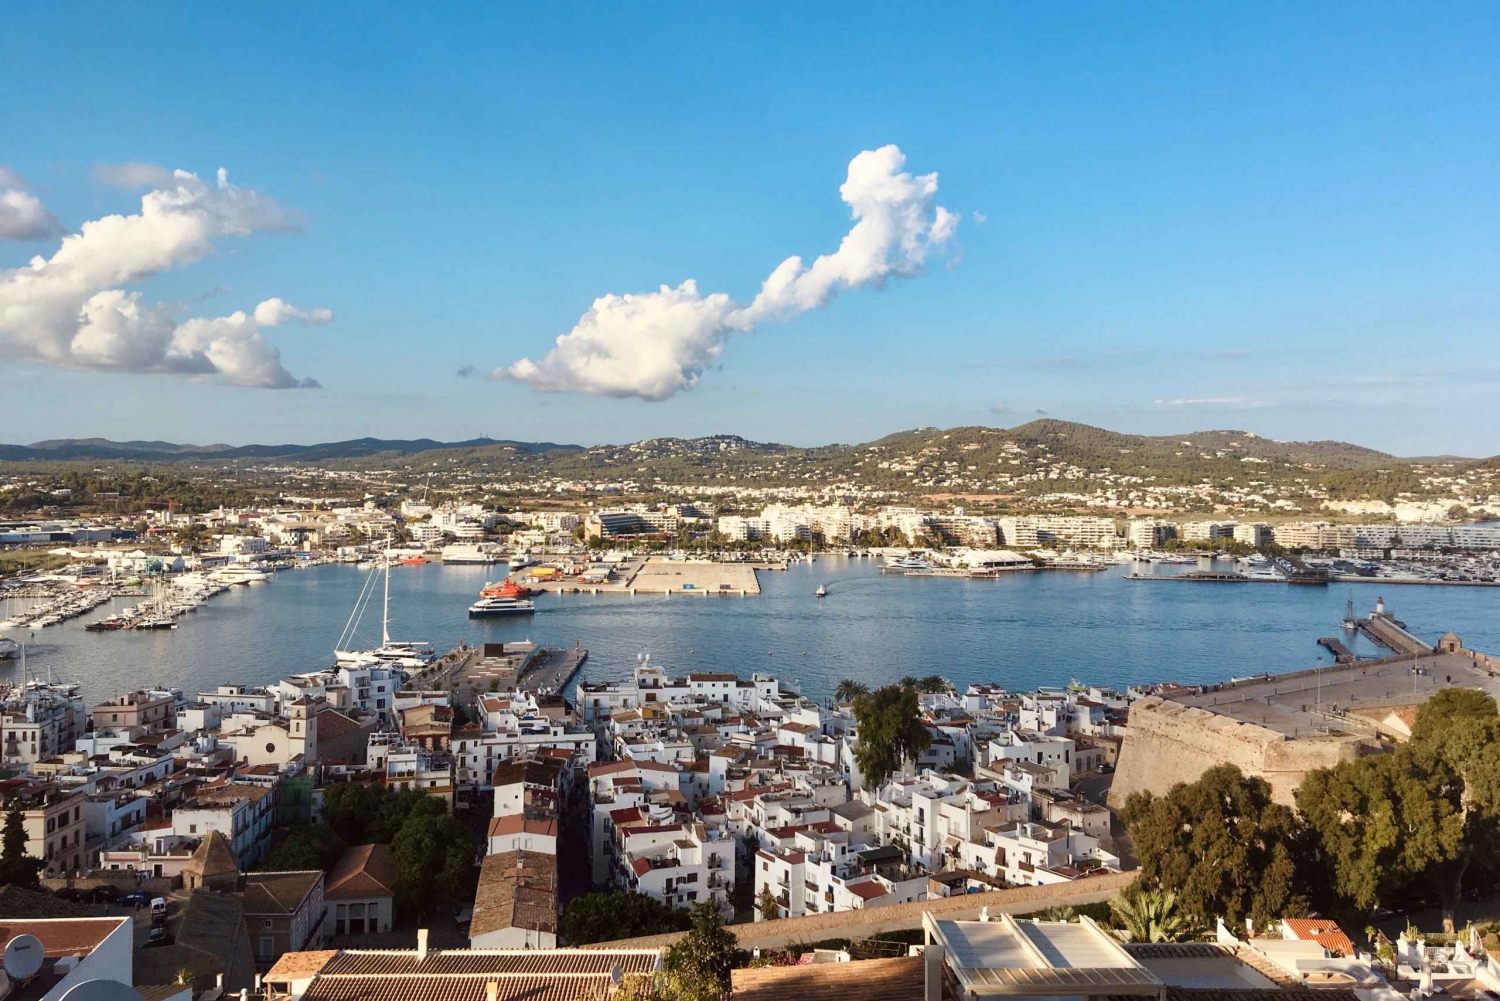 Ibiza: Old Town Guided Walking Tour